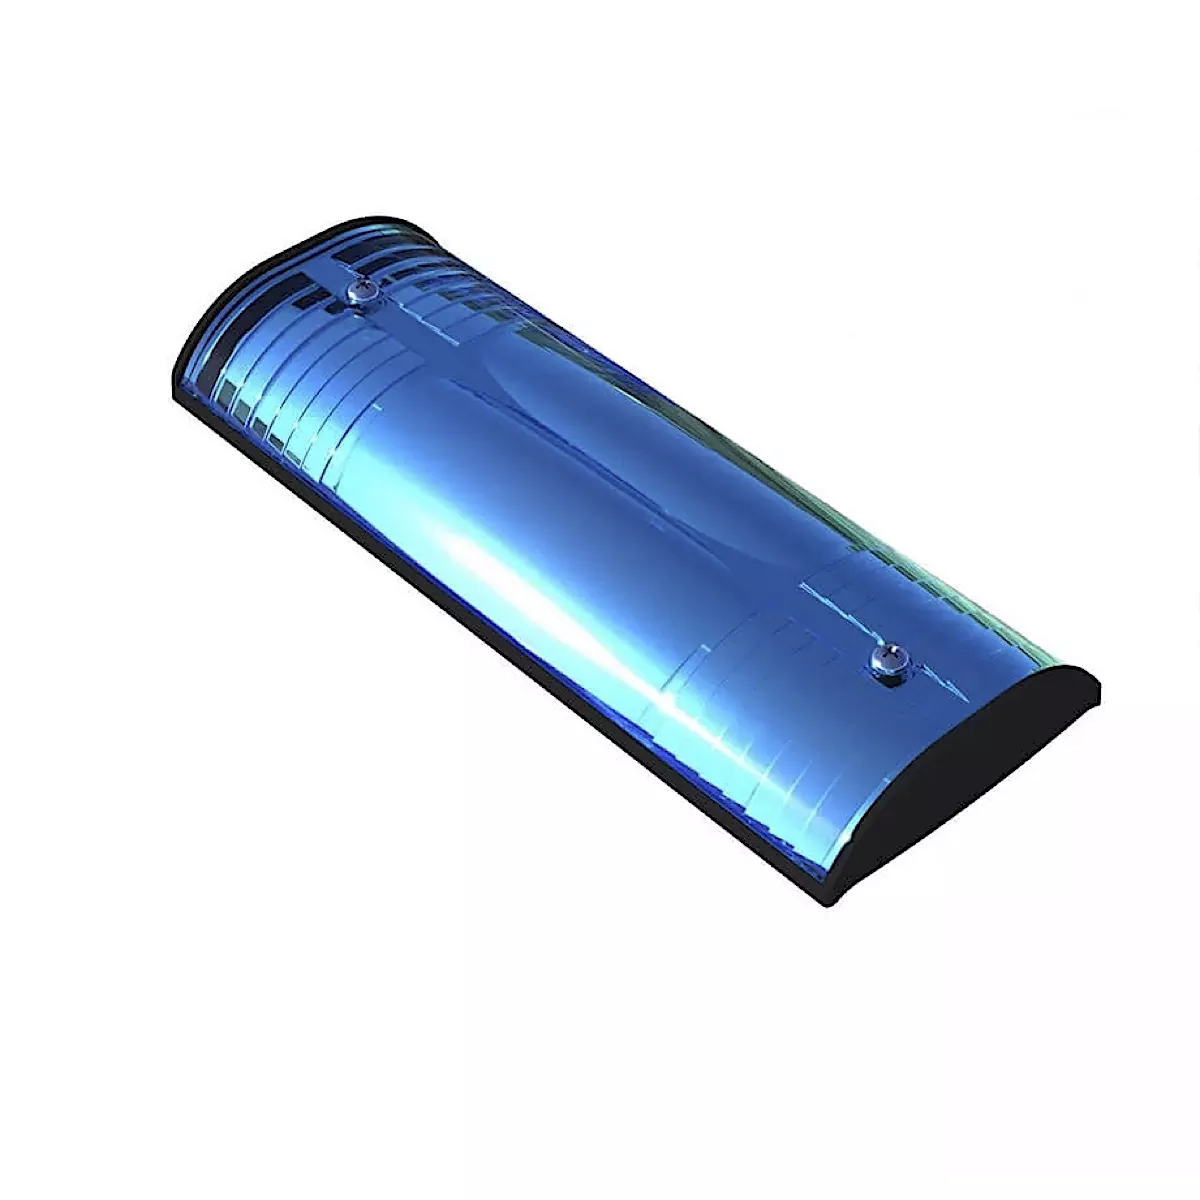 Reflektor General Wildwarnreflektor im Gehäuse, Farbe lichtblau, inkl. Befestigungsmaterial